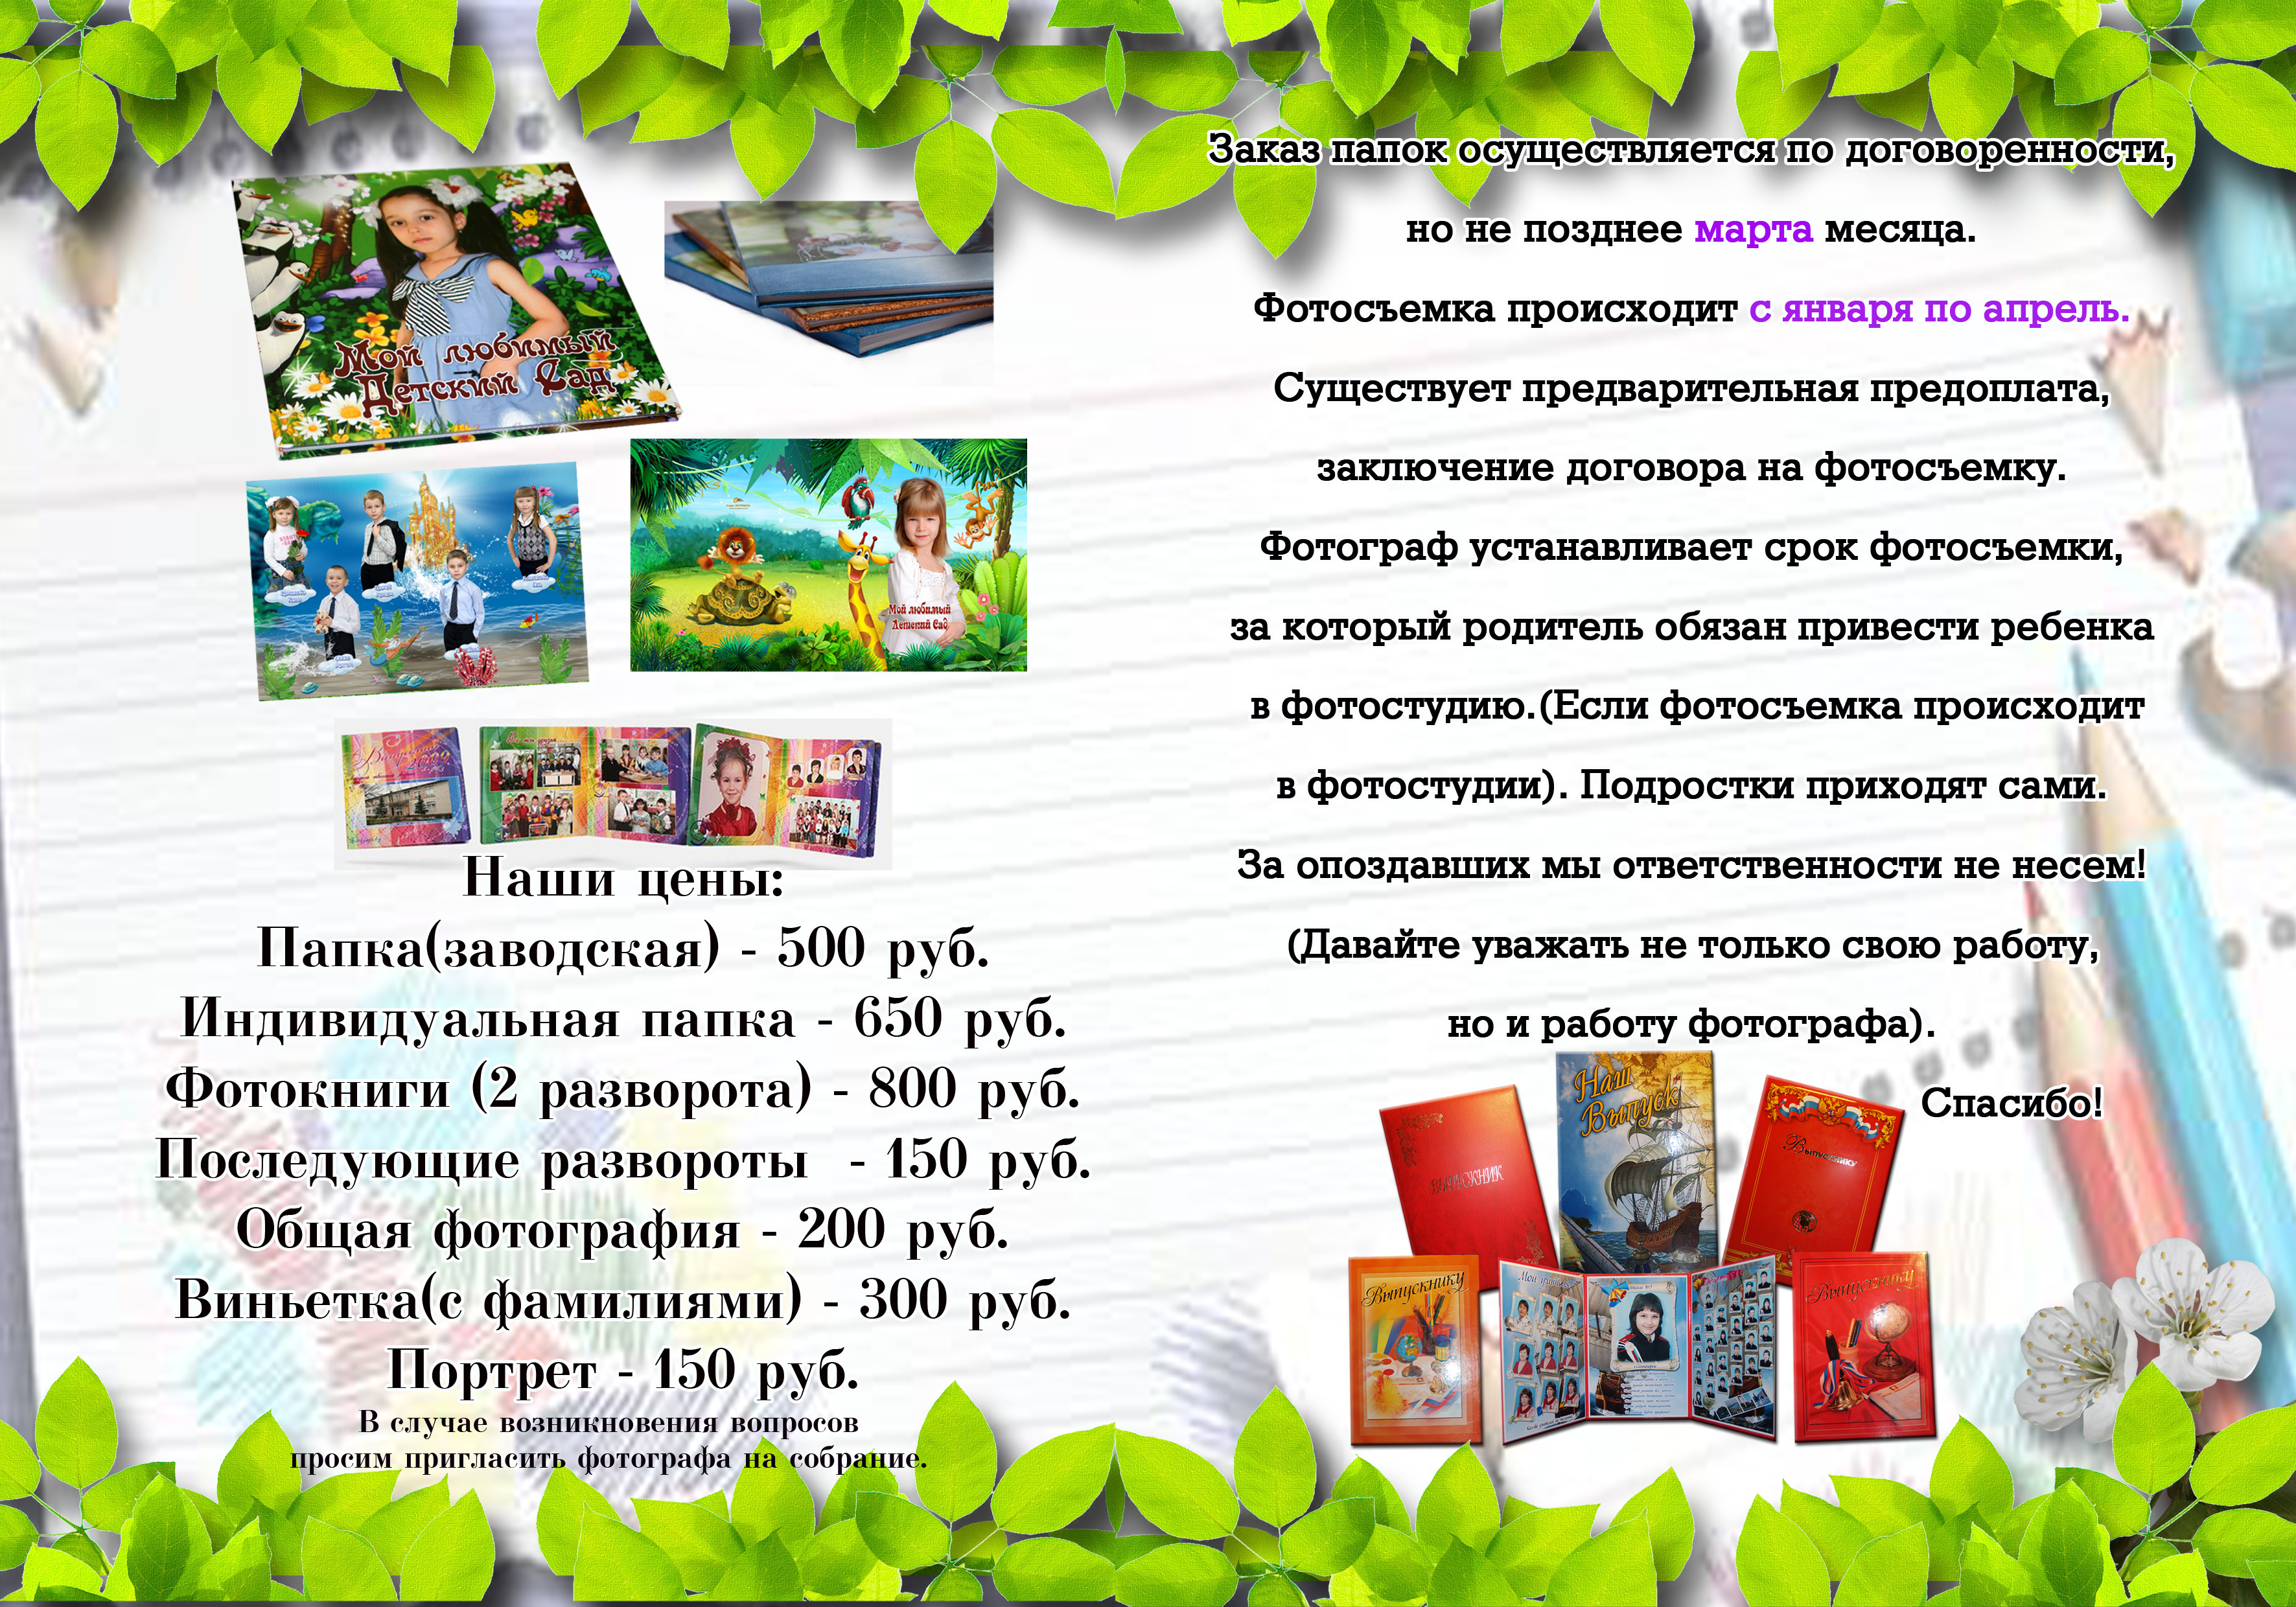 Саяногорск Инфо - vnutrennyaya-broshura.jpg, Скачано: 859